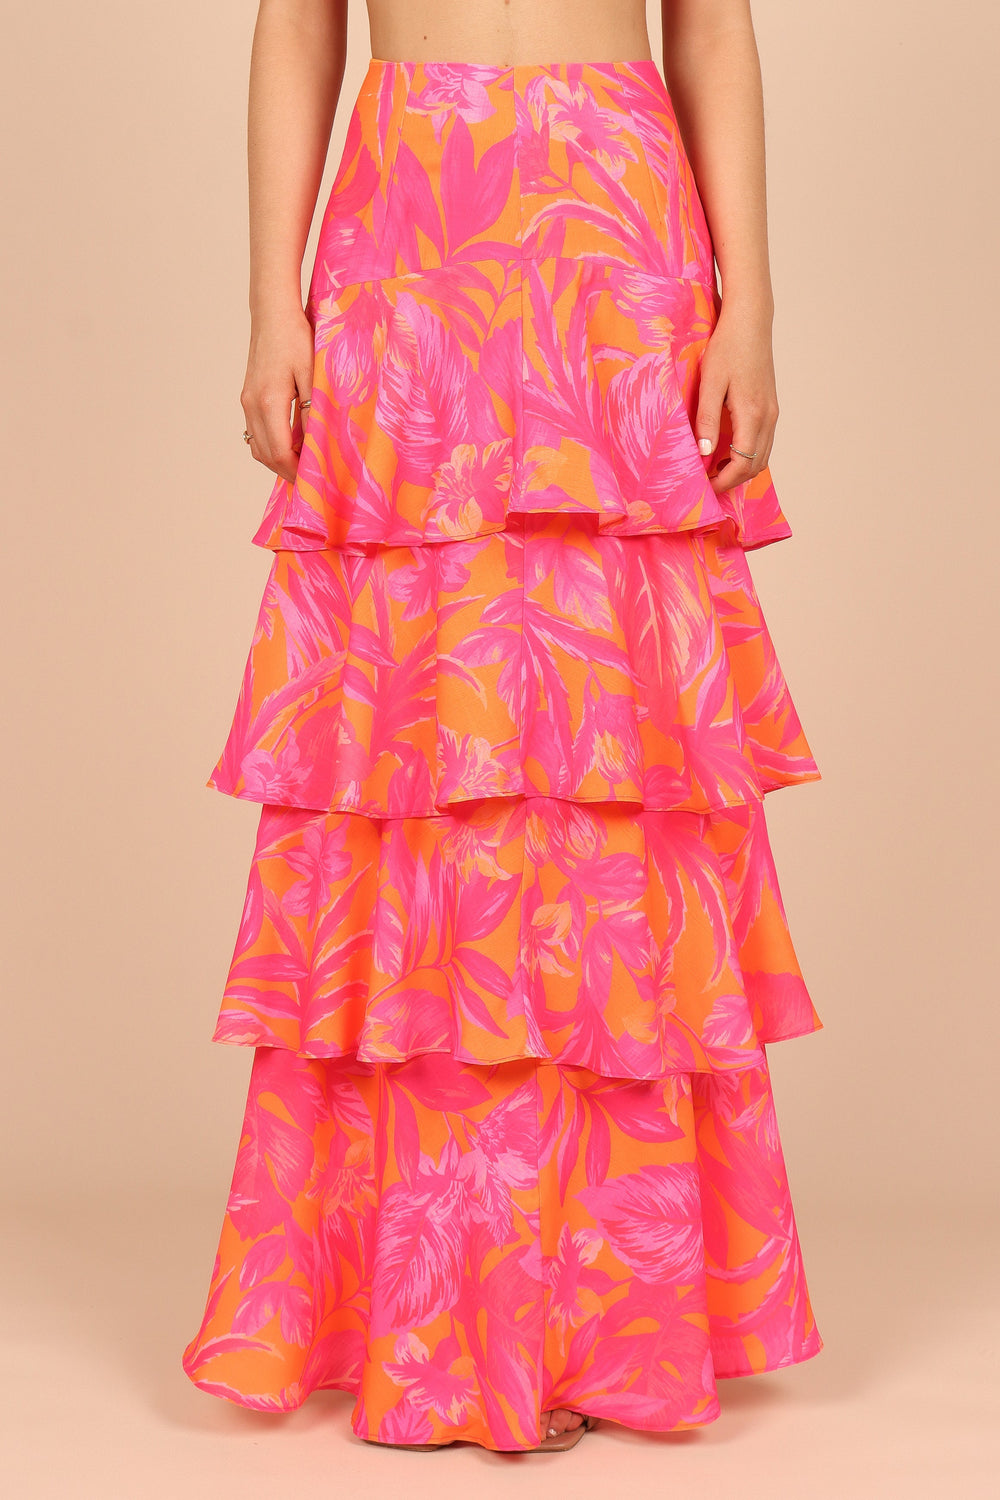 BOTTOMS @Addison Maxi Skirt - Pink Tropics